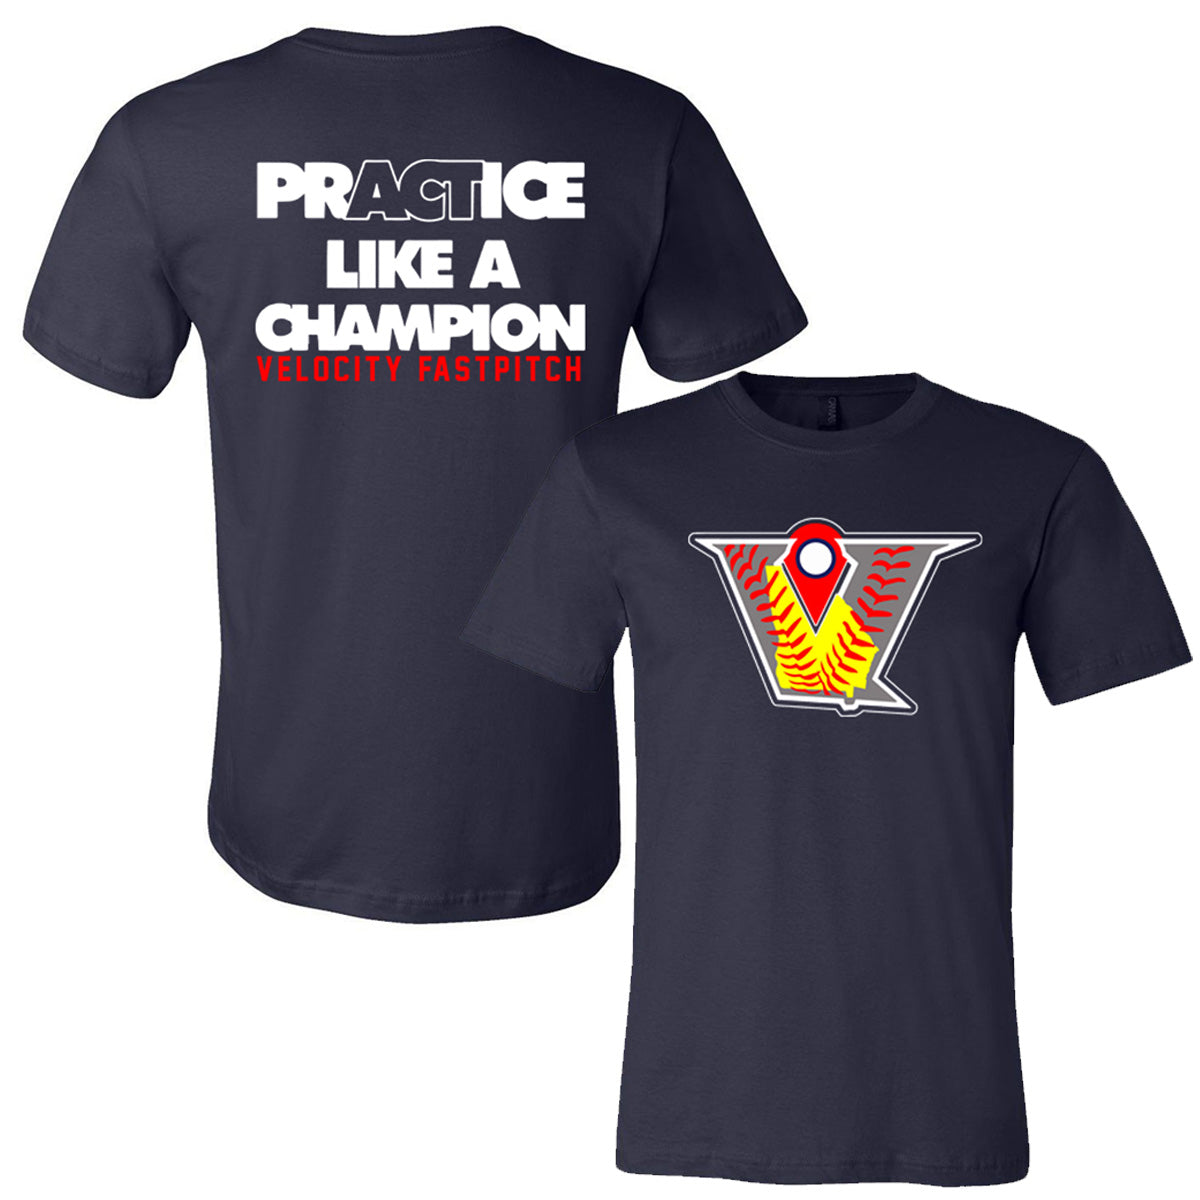 Velo FP - Velo Softball Logo - PrACTice Like A Champion - Navy Short Sleeve (Tee/Hoodie/Sweatshirt) - Southern Grace Creations